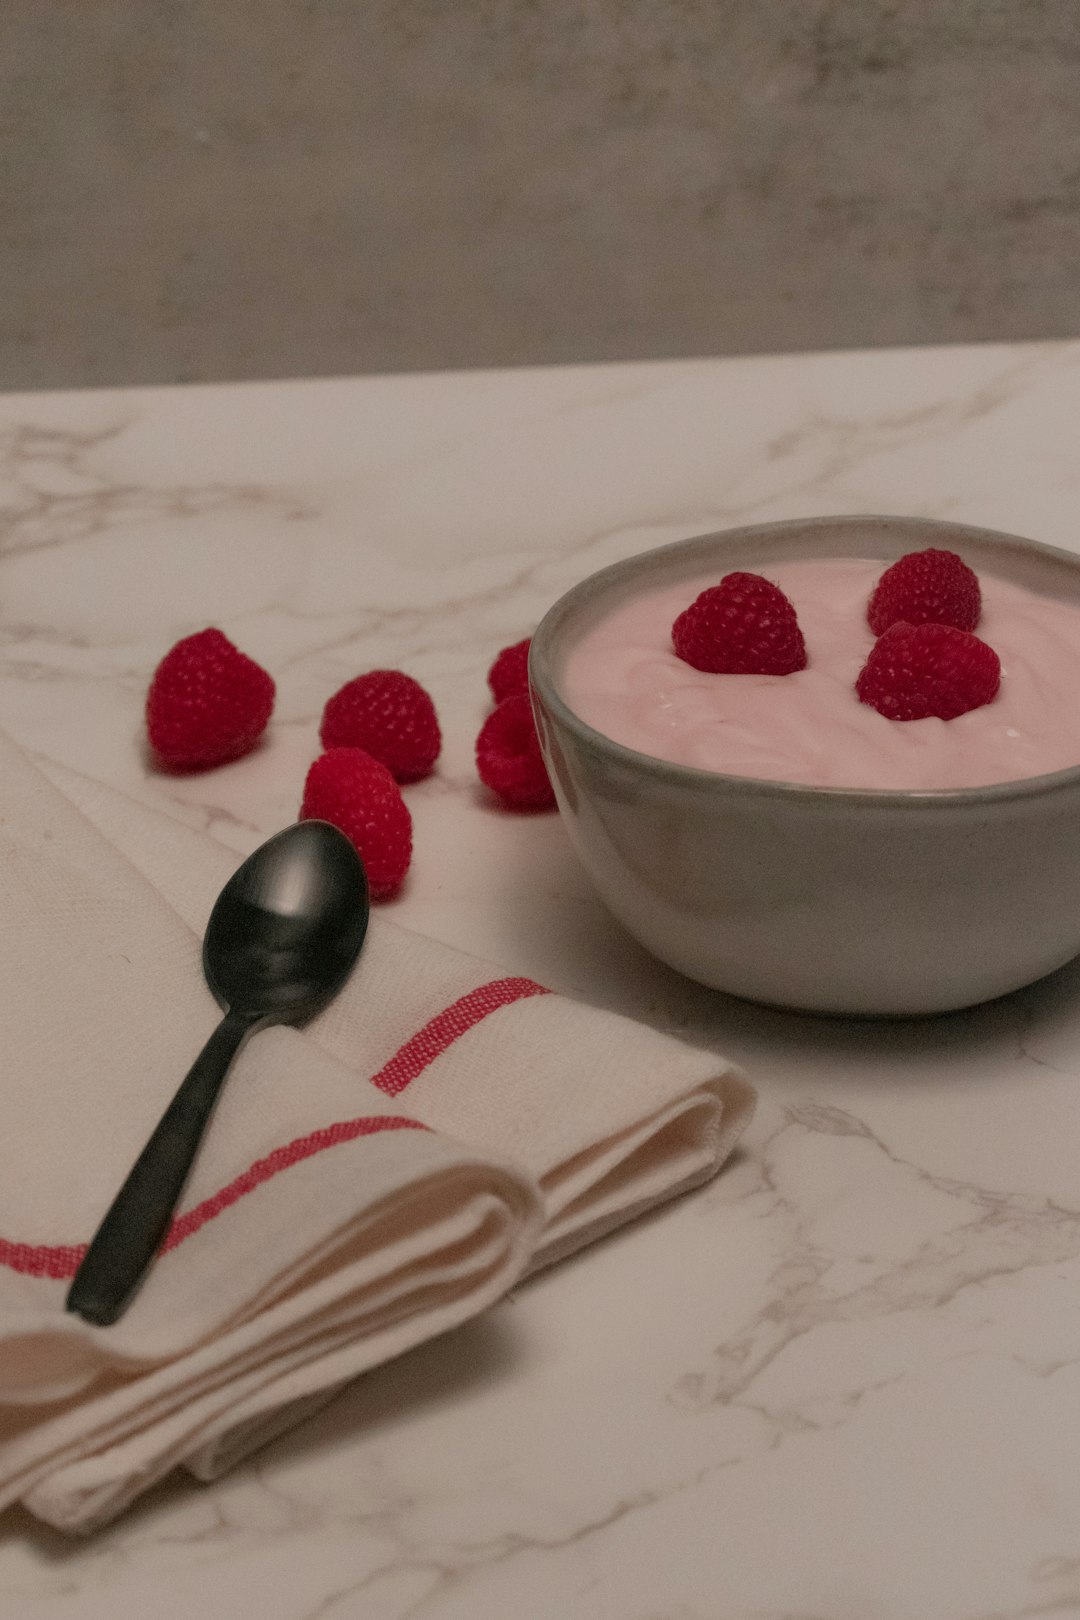 white ceramic bowl with strawberry and cream